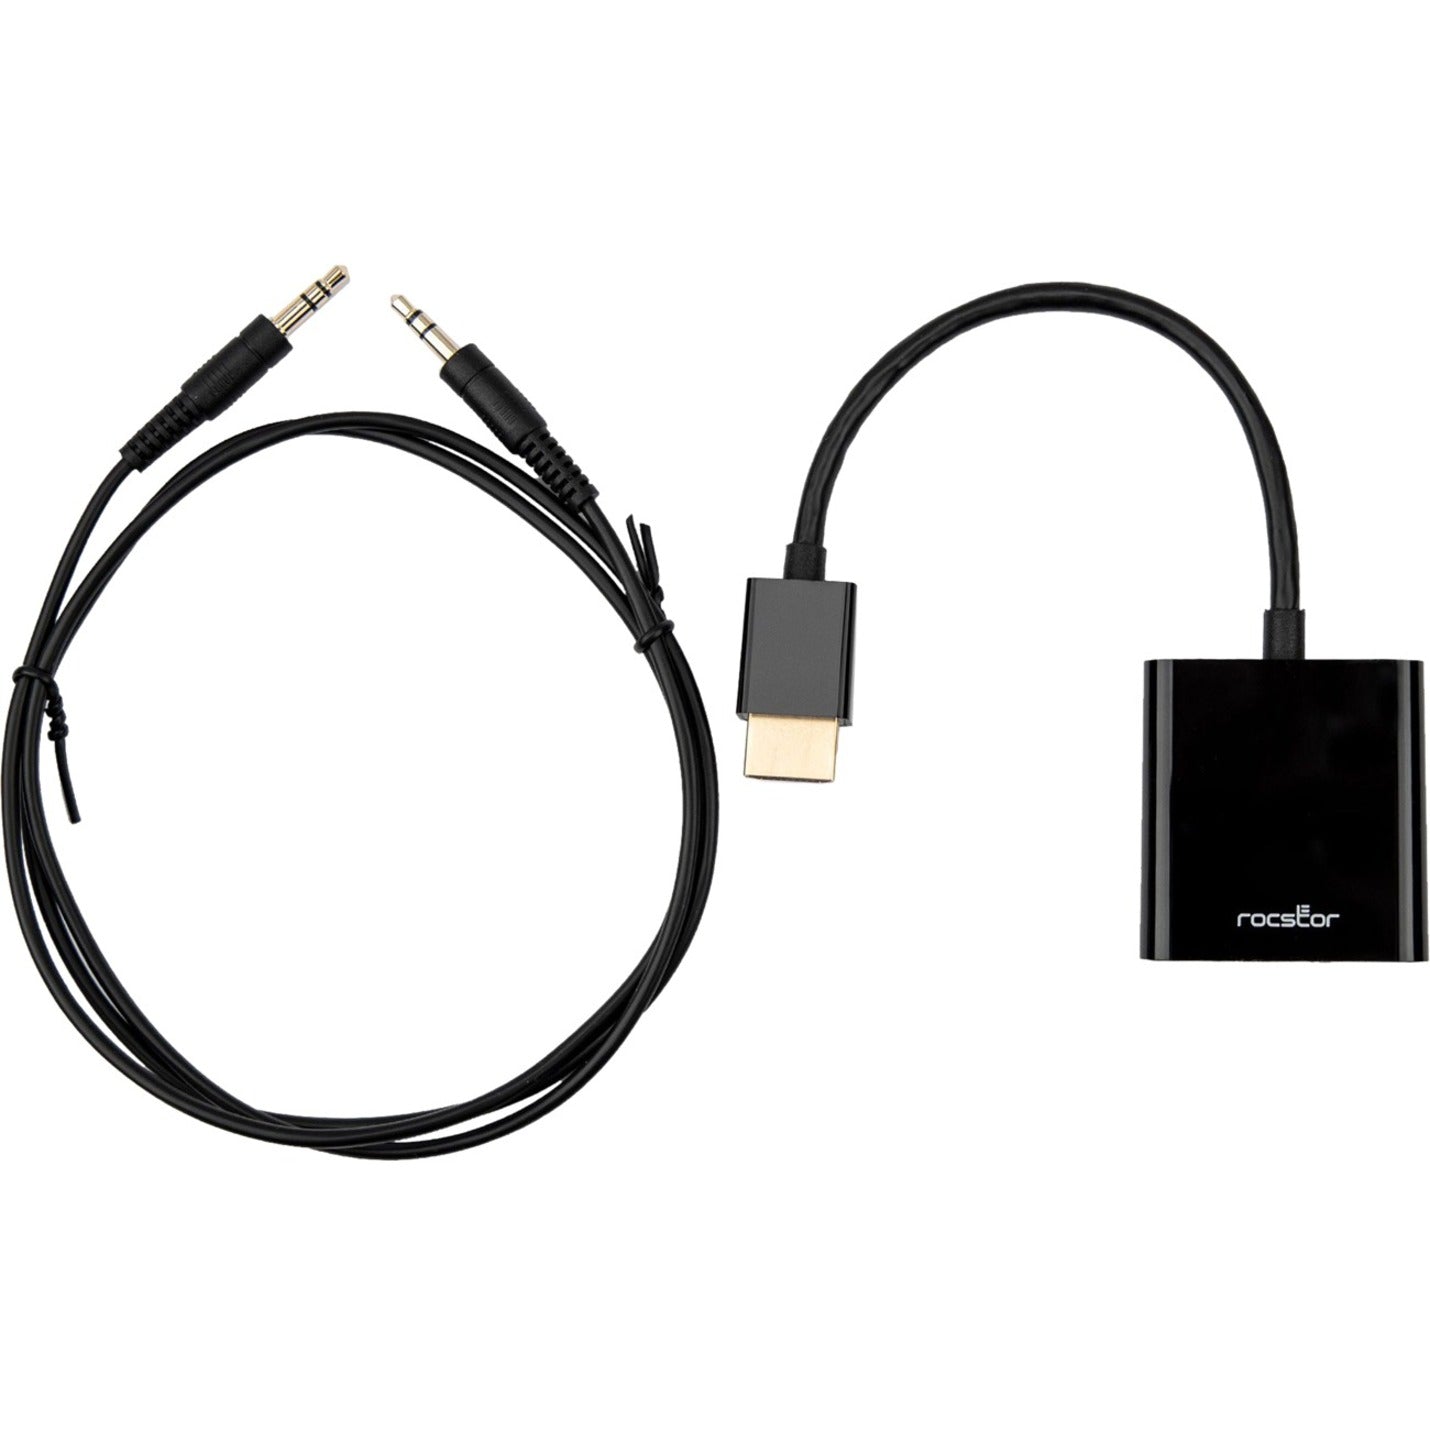 Rocstor Y10A187-B1 Premium HDMI to VGA + 3.5mm Audio Adapter, Active, 1920 x 1080 Resolution, Black